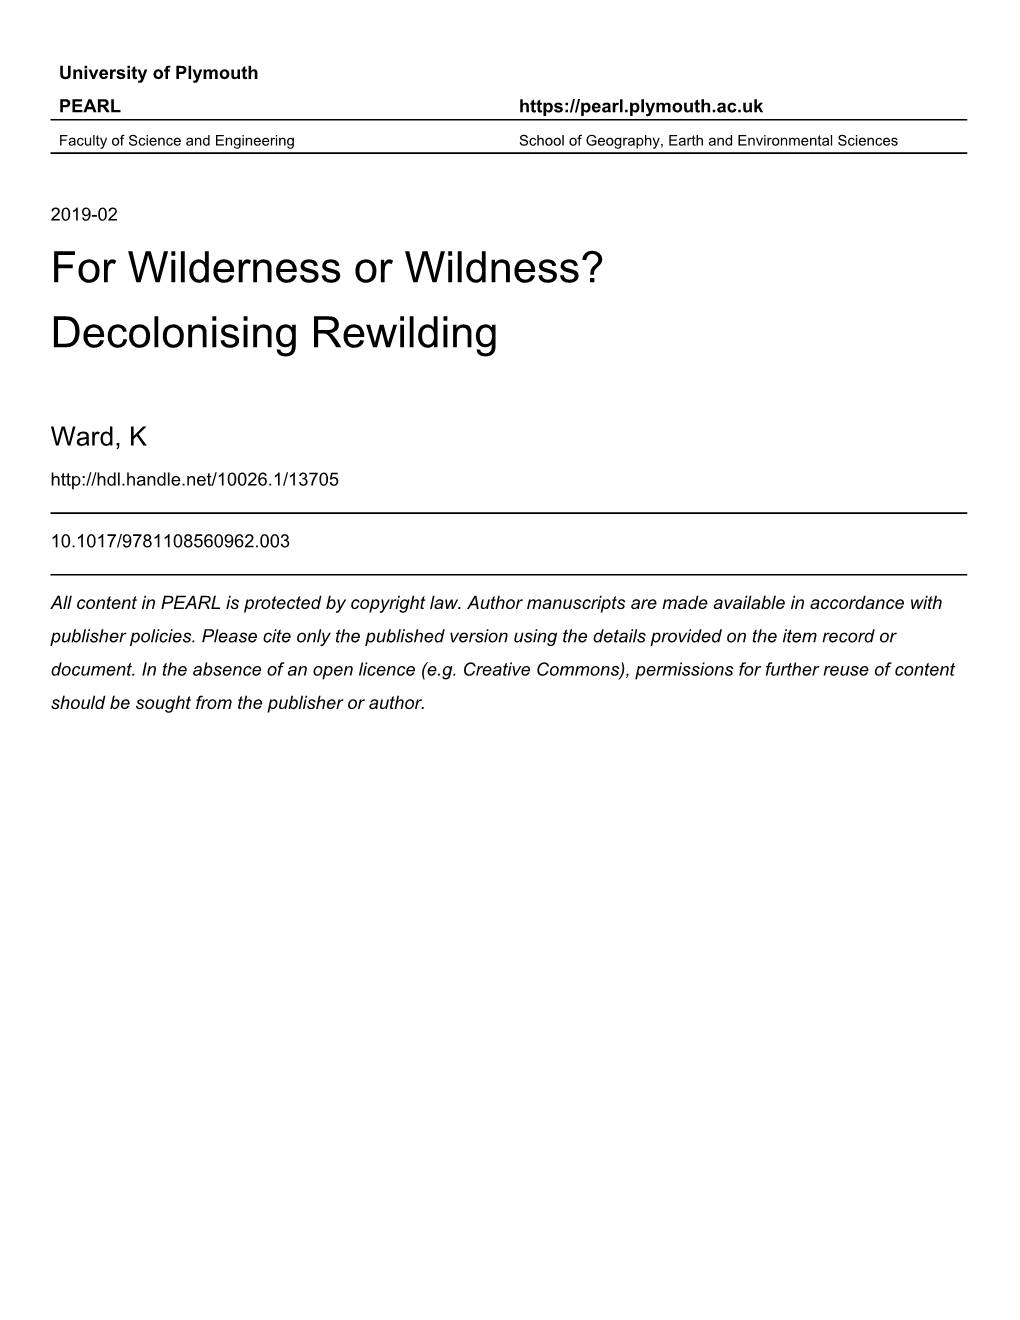 For Wilderness Or Wildness? Decolonising Rewilding